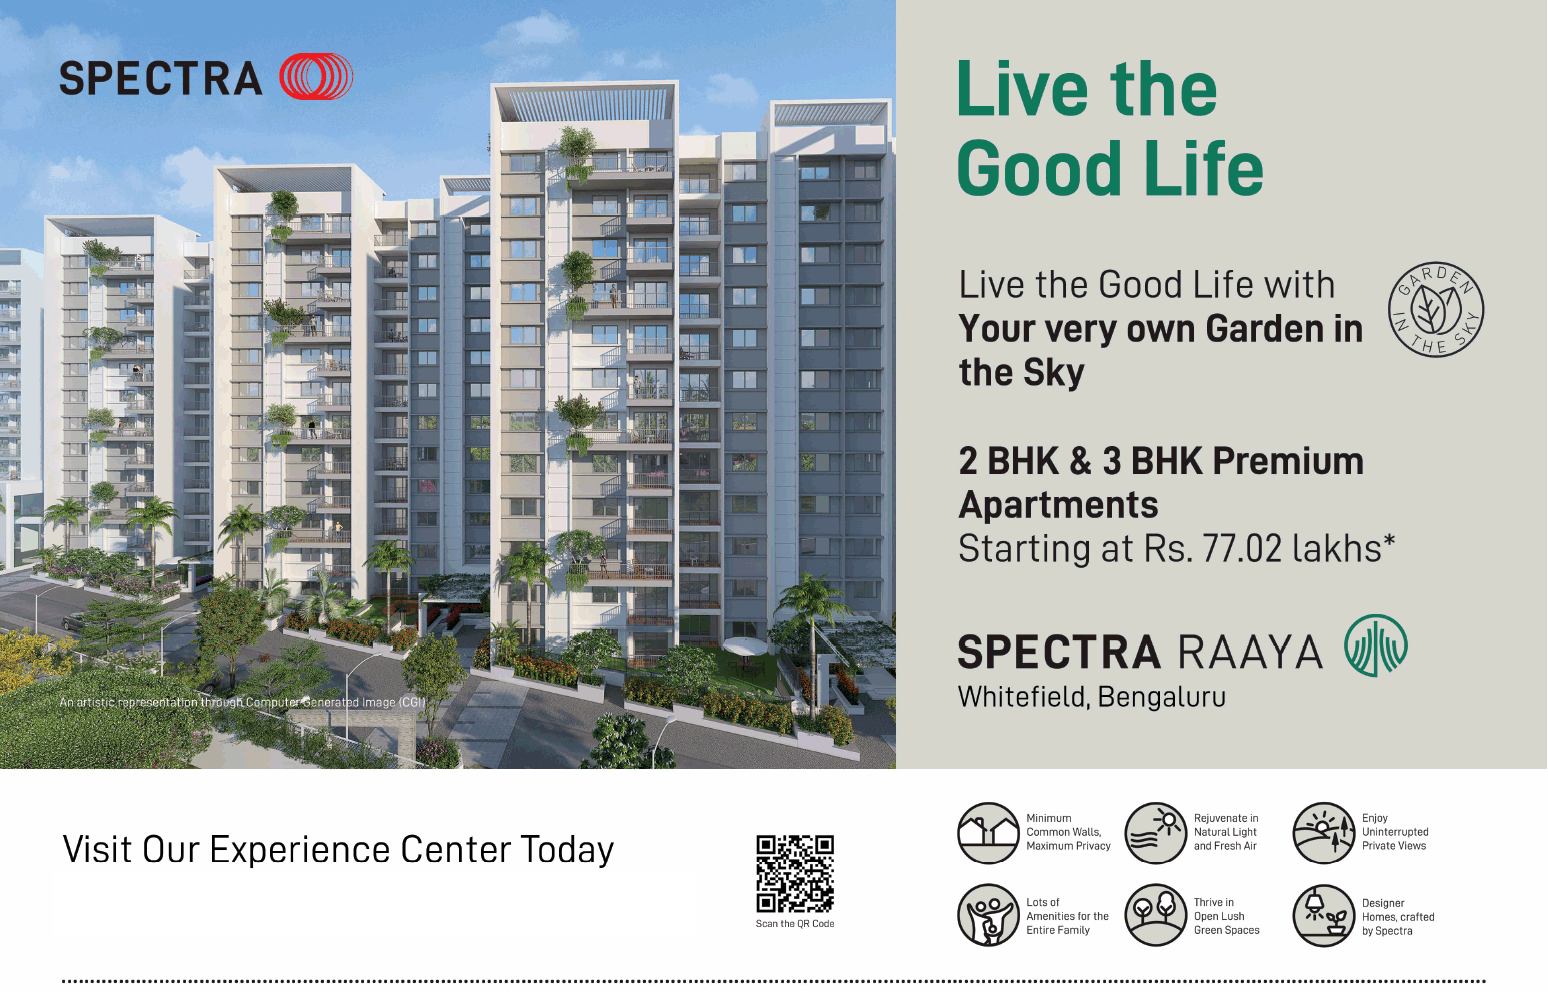 Premium apartments starting at Rs 77.02 lakh at Spectra Raaya in Bangalore